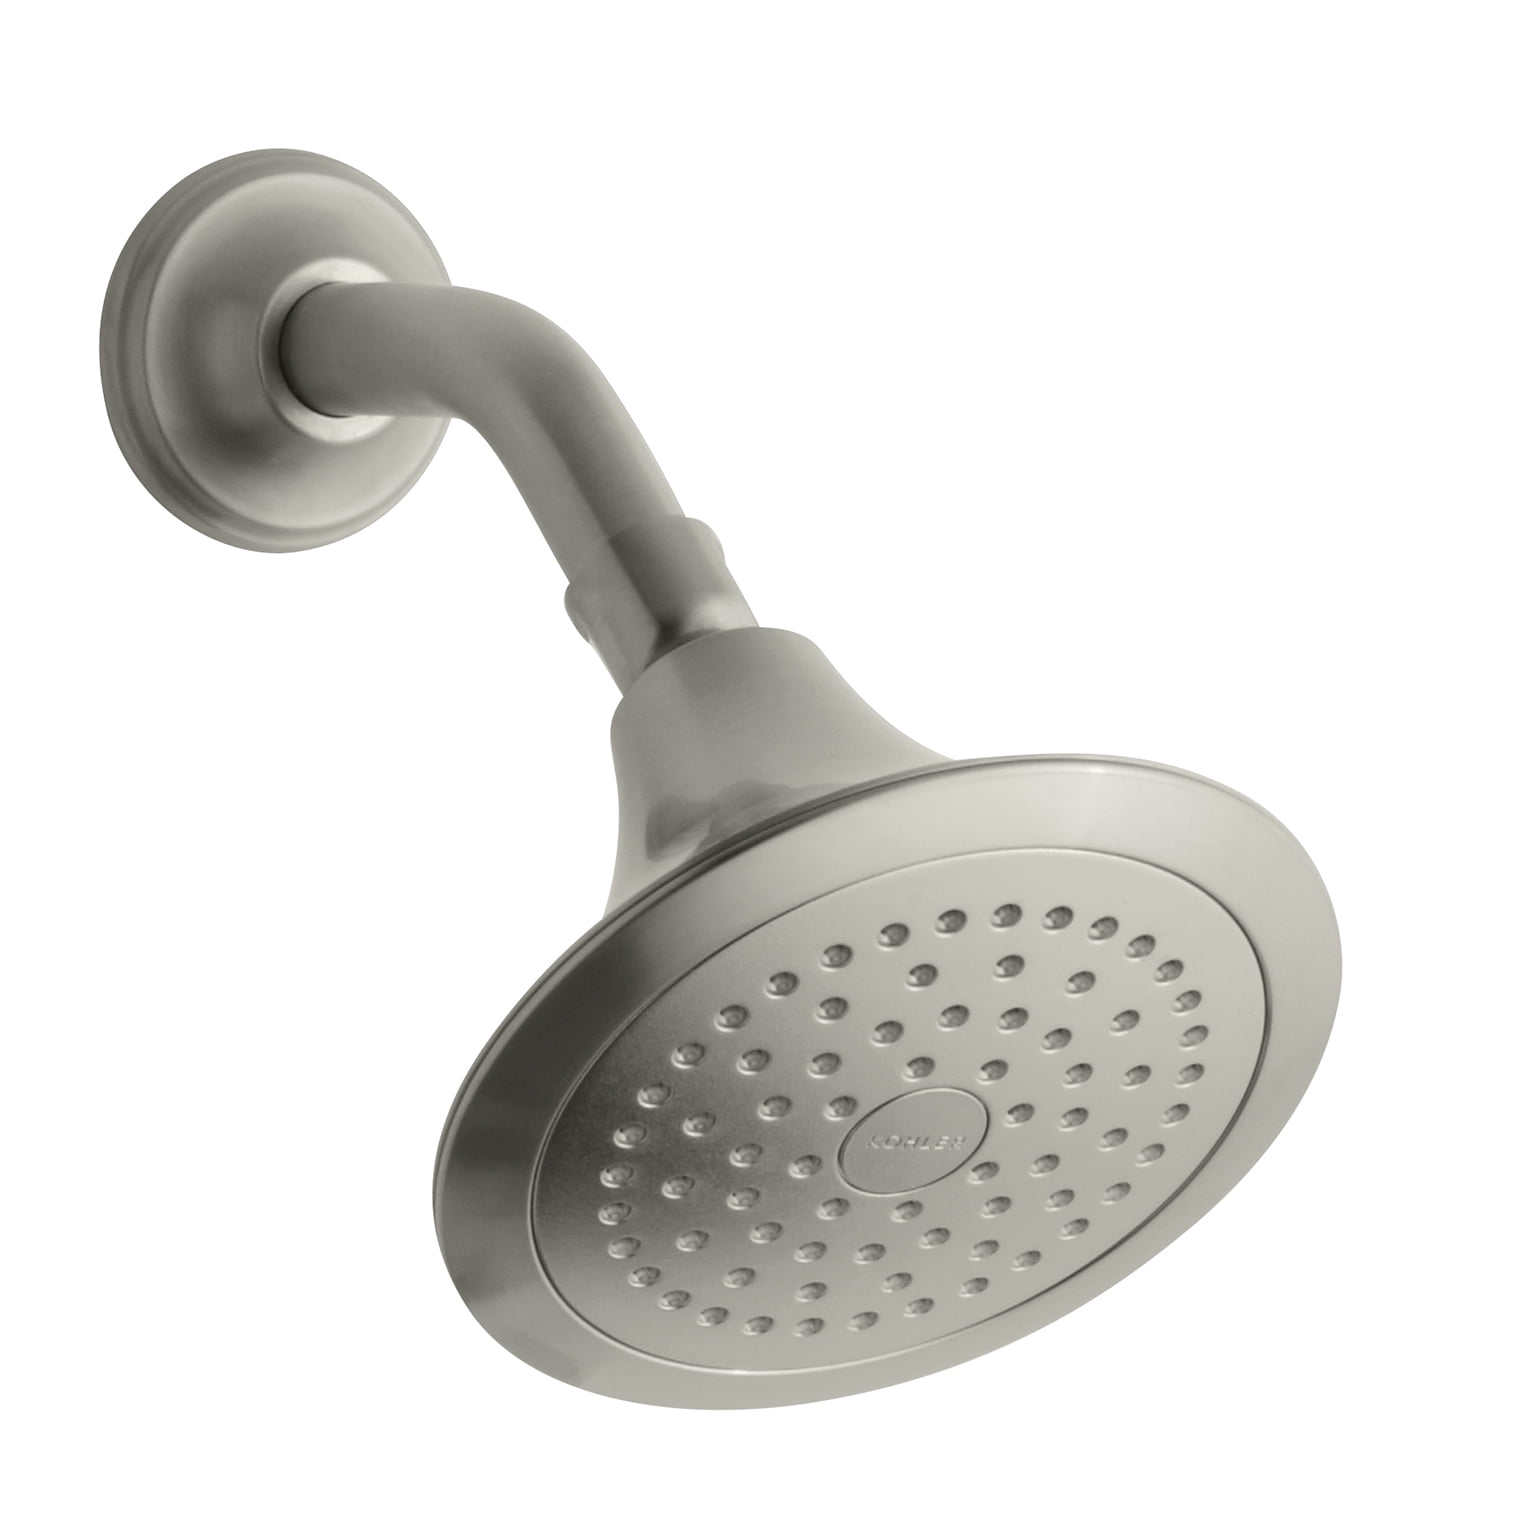 5 Setting Water Saving Multi-function Bathroom Faucet Set Shower HEAD Chrome Bn5 for sale online 